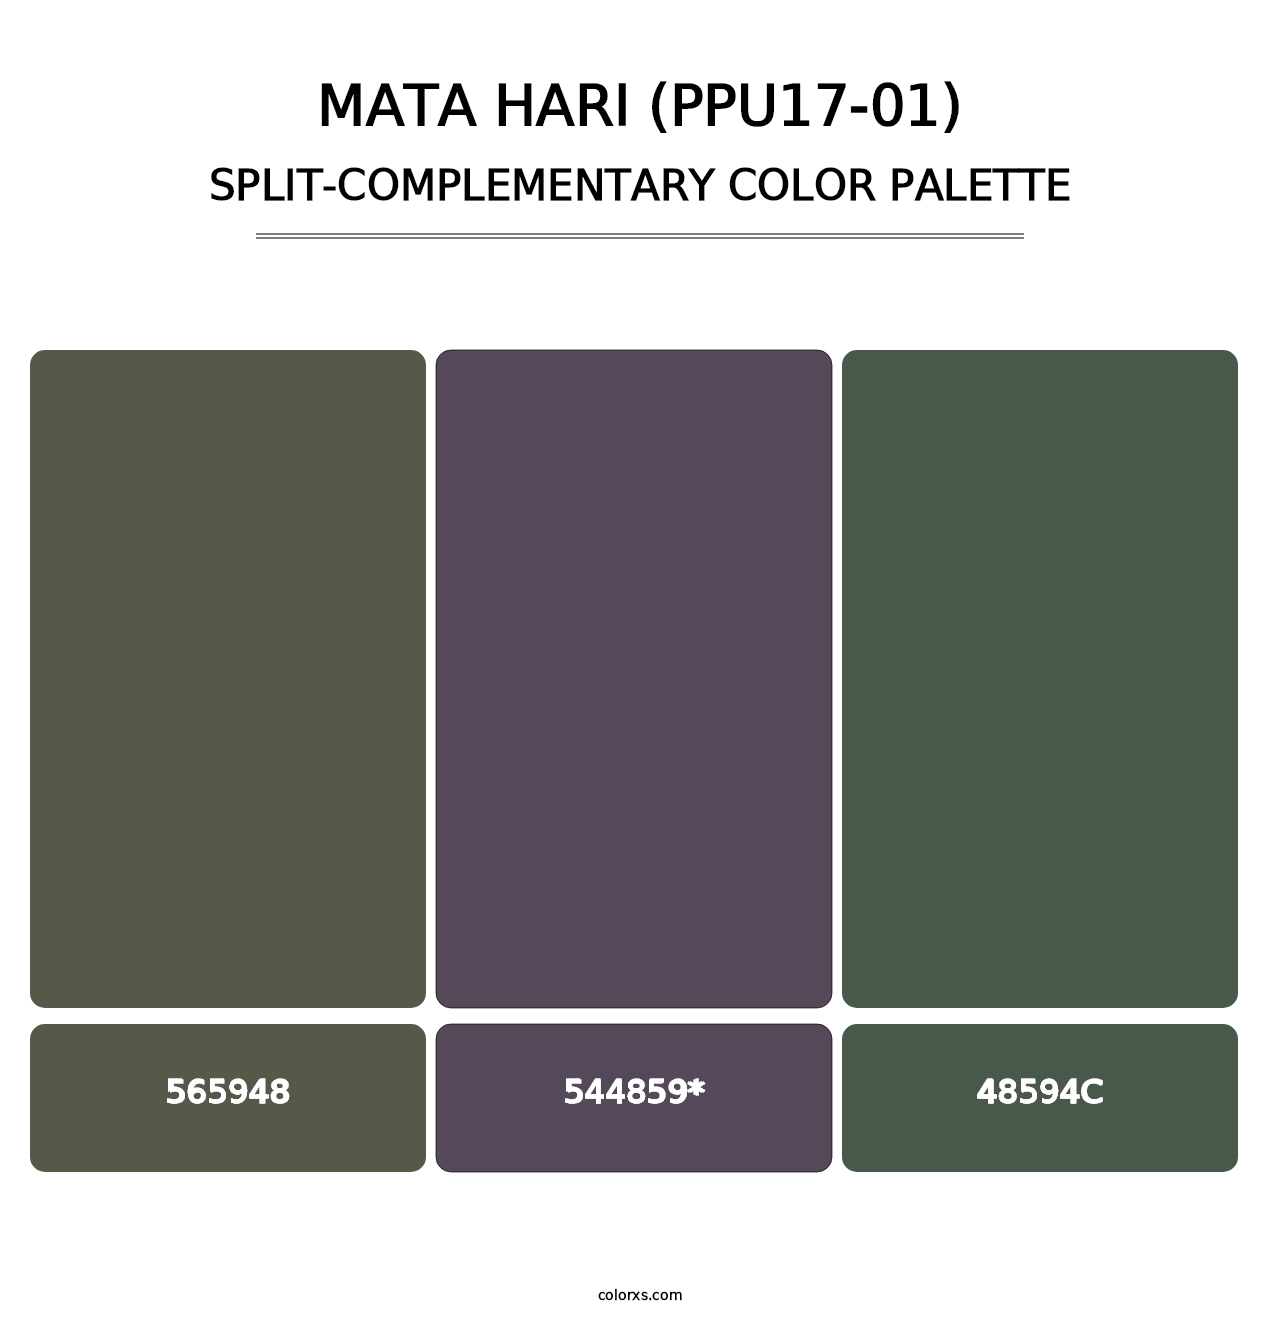 Mata Hari (PPU17-01) - Split-Complementary Color Palette